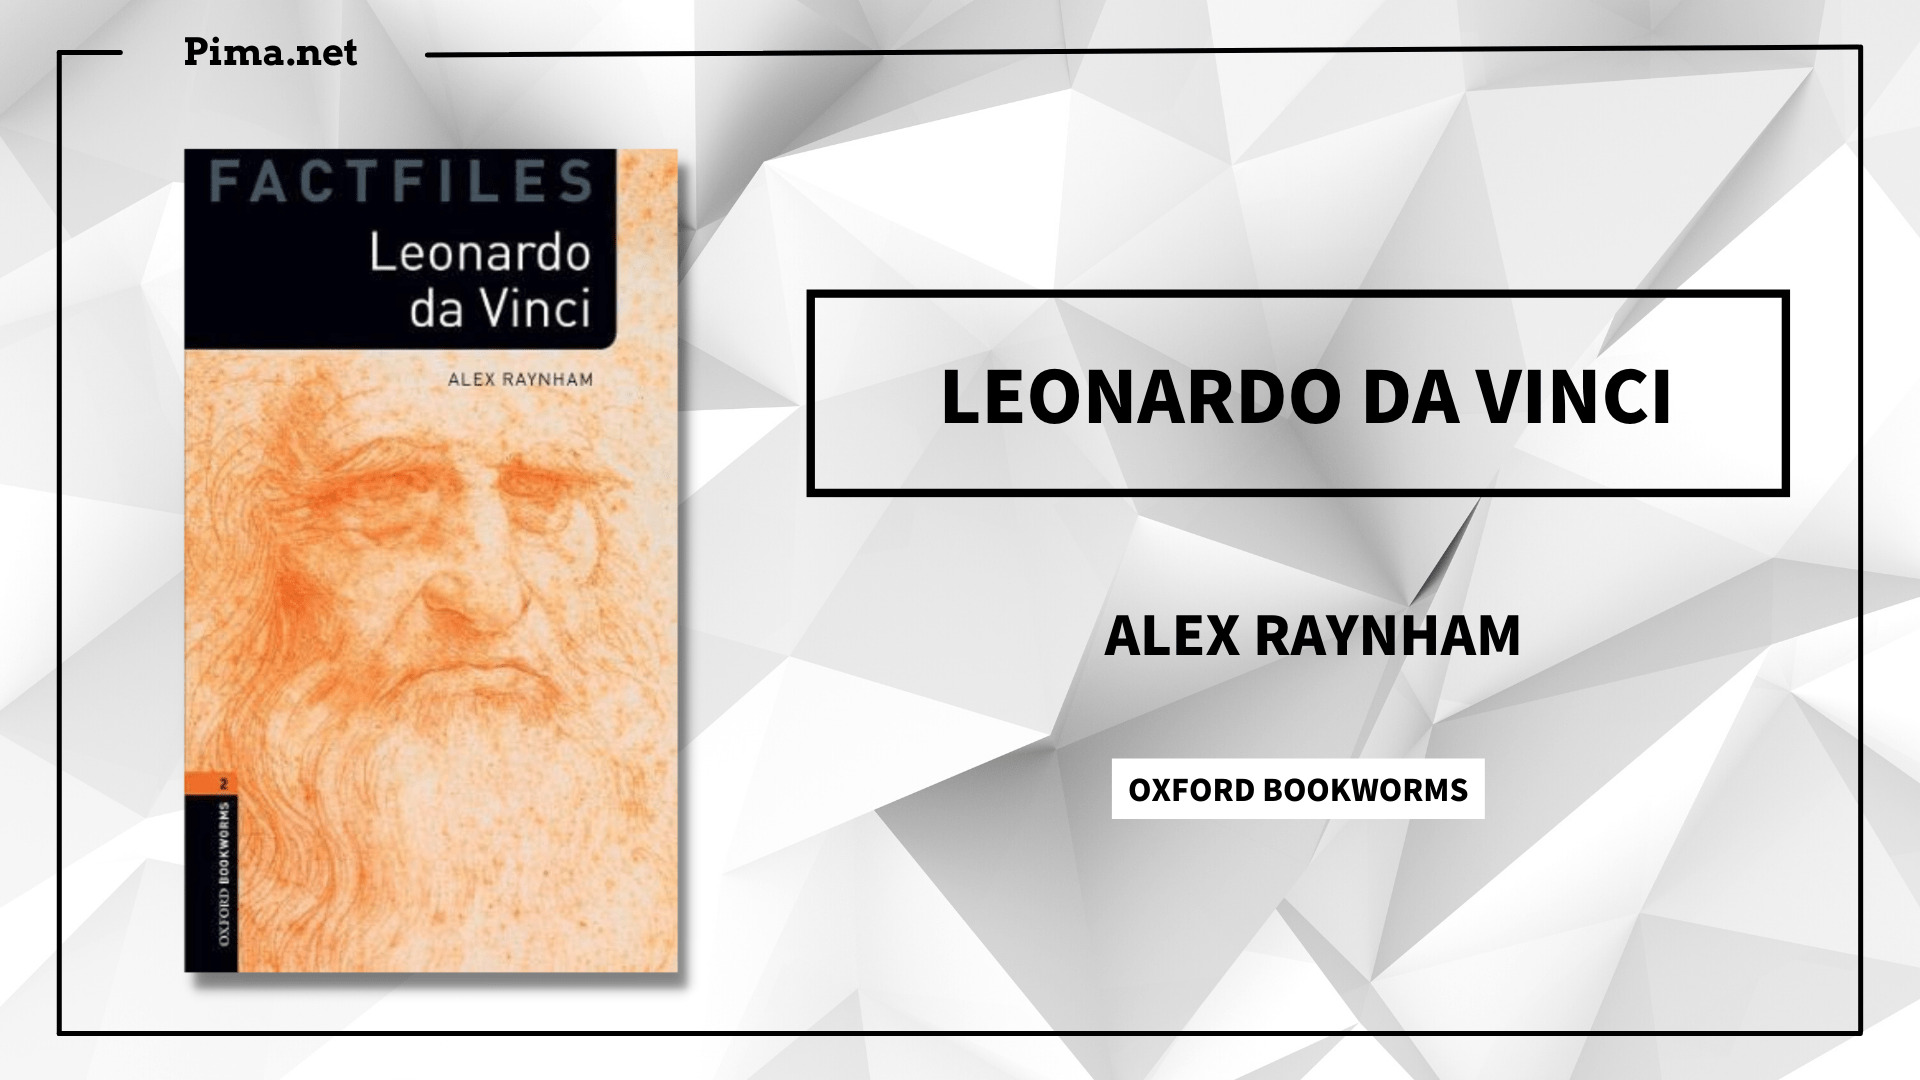 Oxford Bookworms "Leonardo da Vinci"